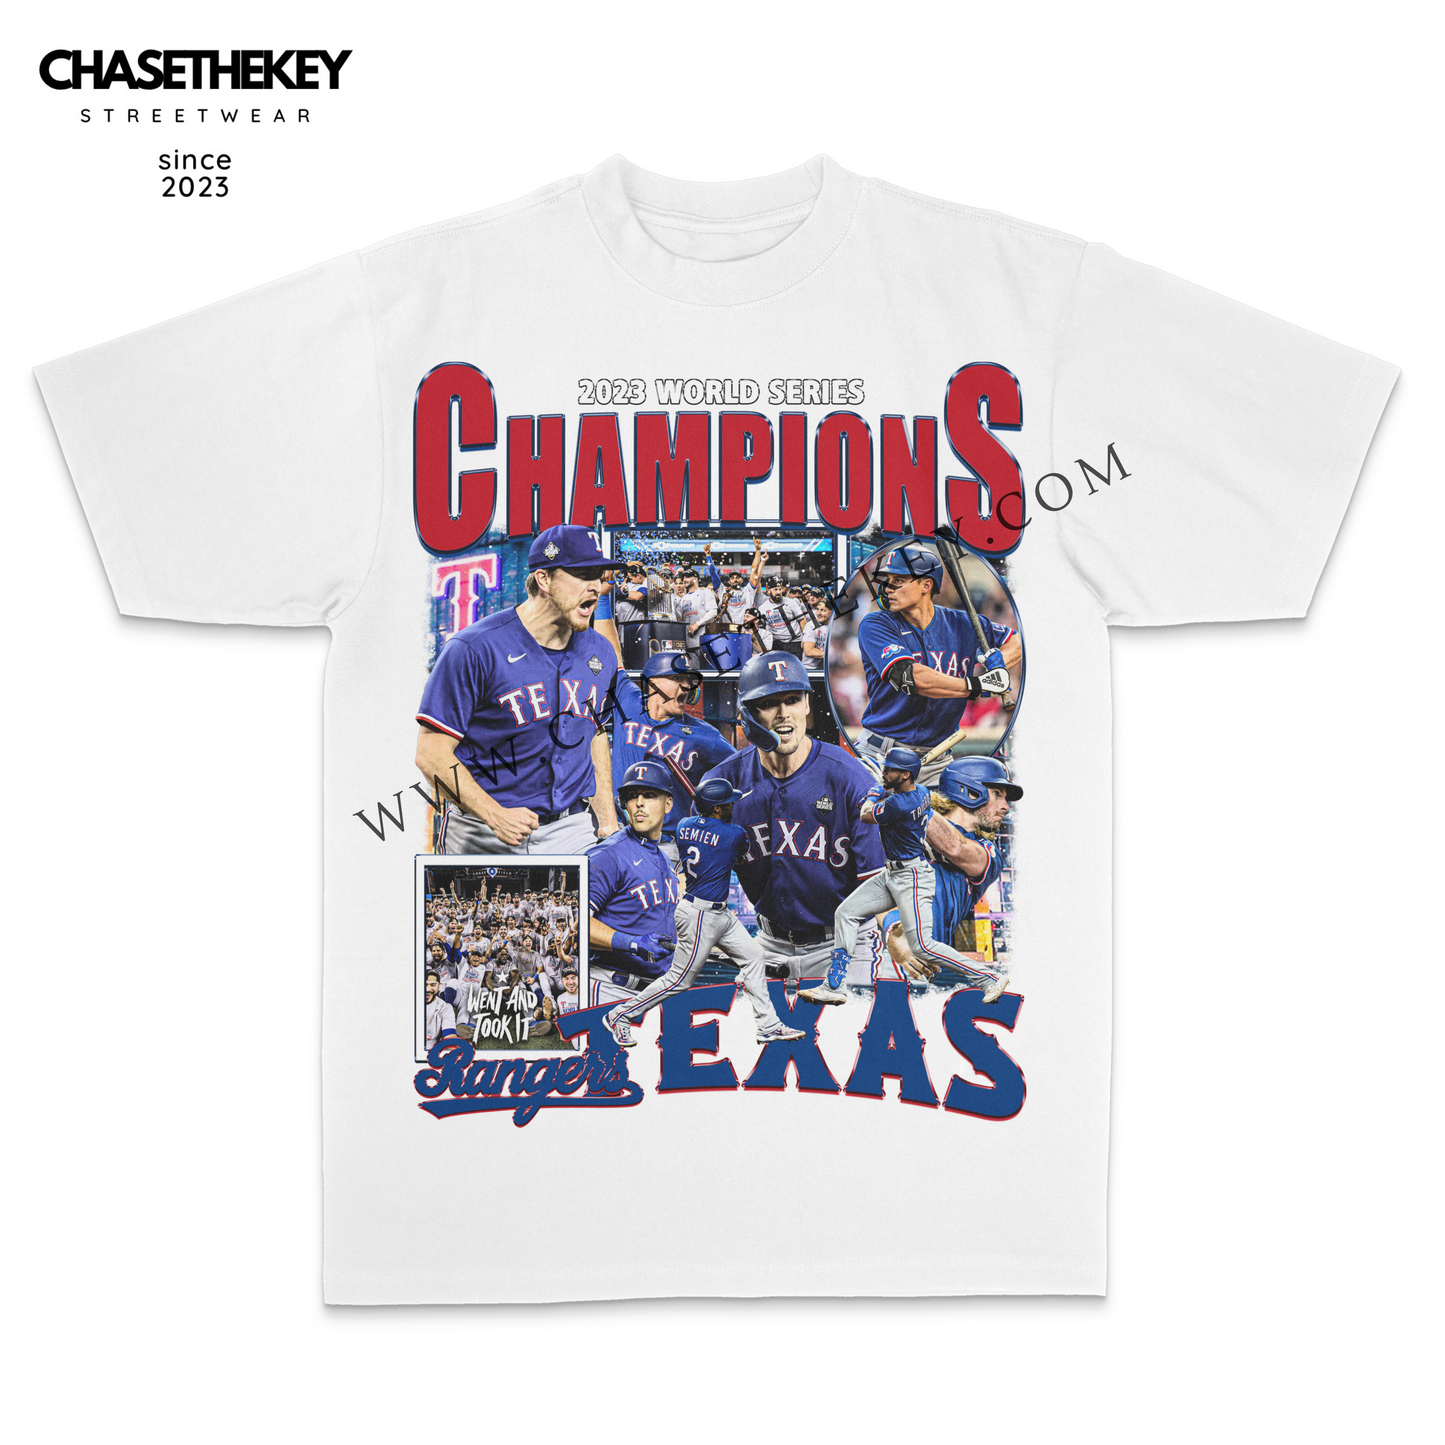 Texas Rangers Shirt